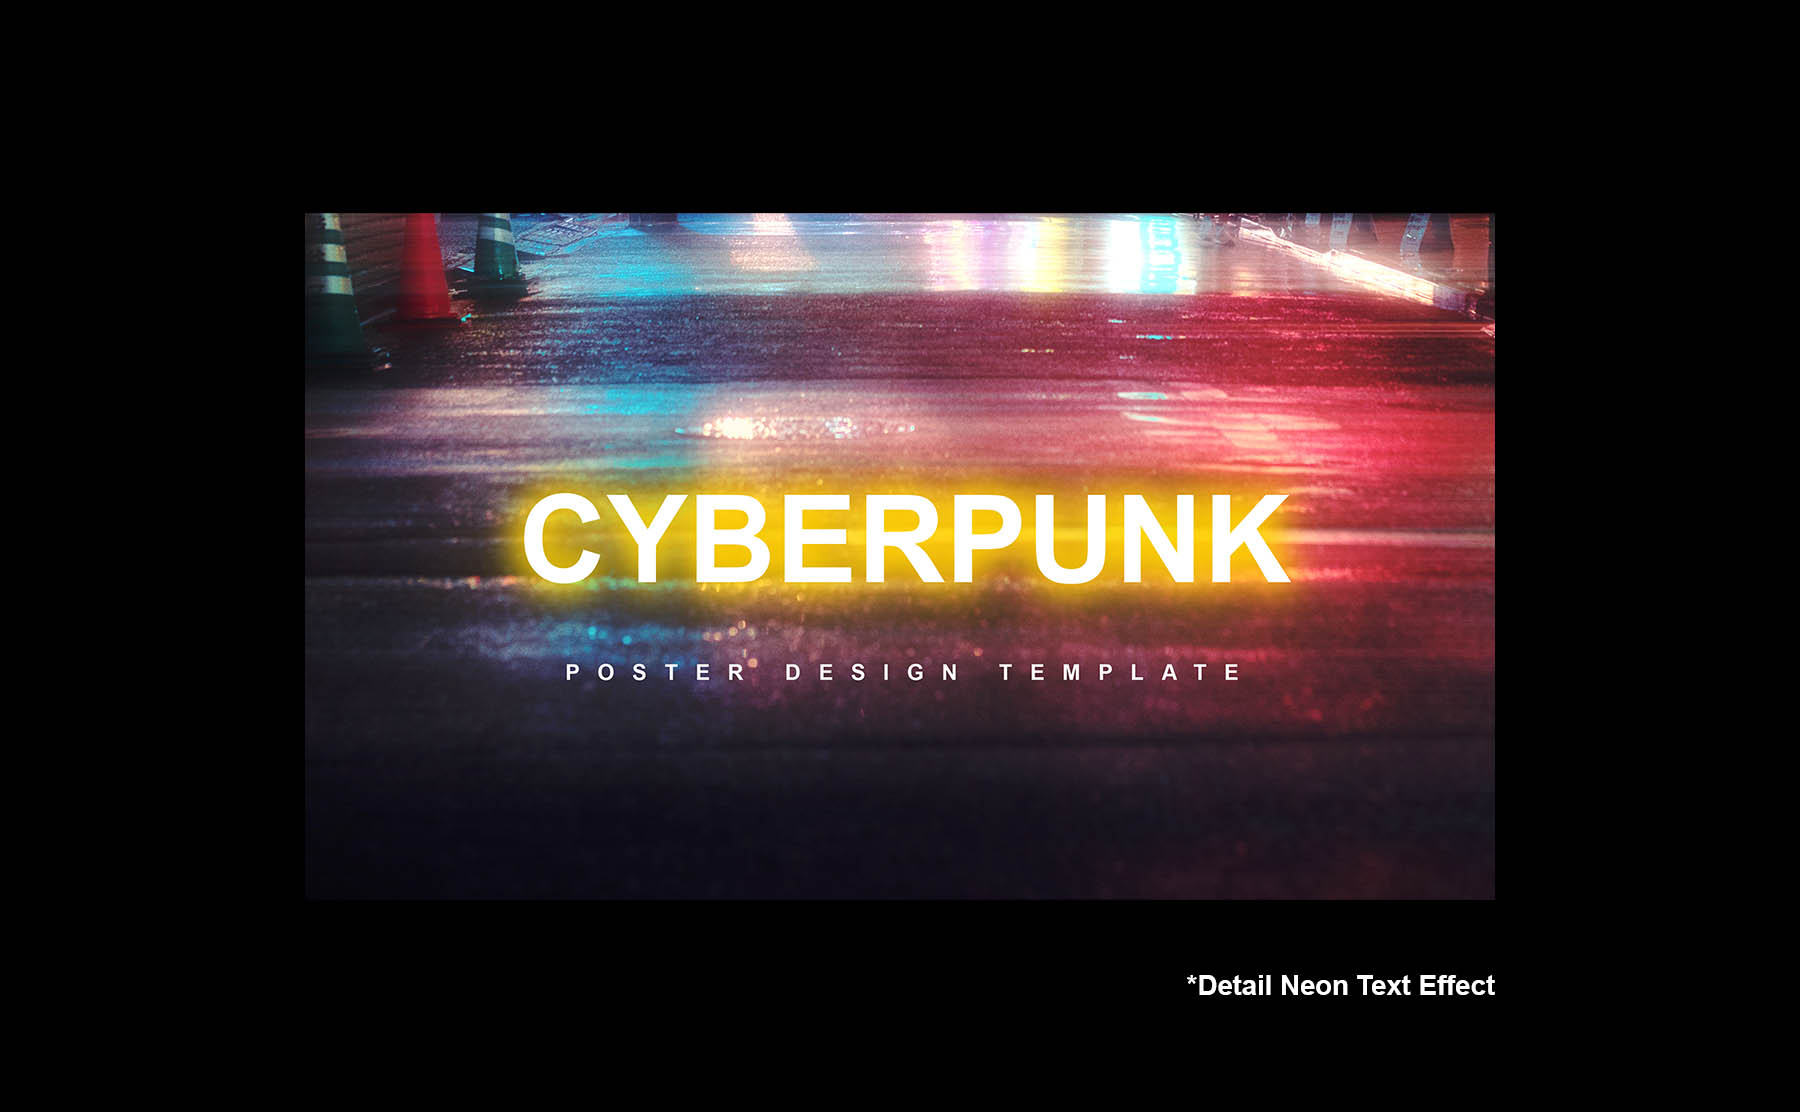 Cyberpunk Photos, Download The BEST Free Cyberpunk Stock Photos & HD Images